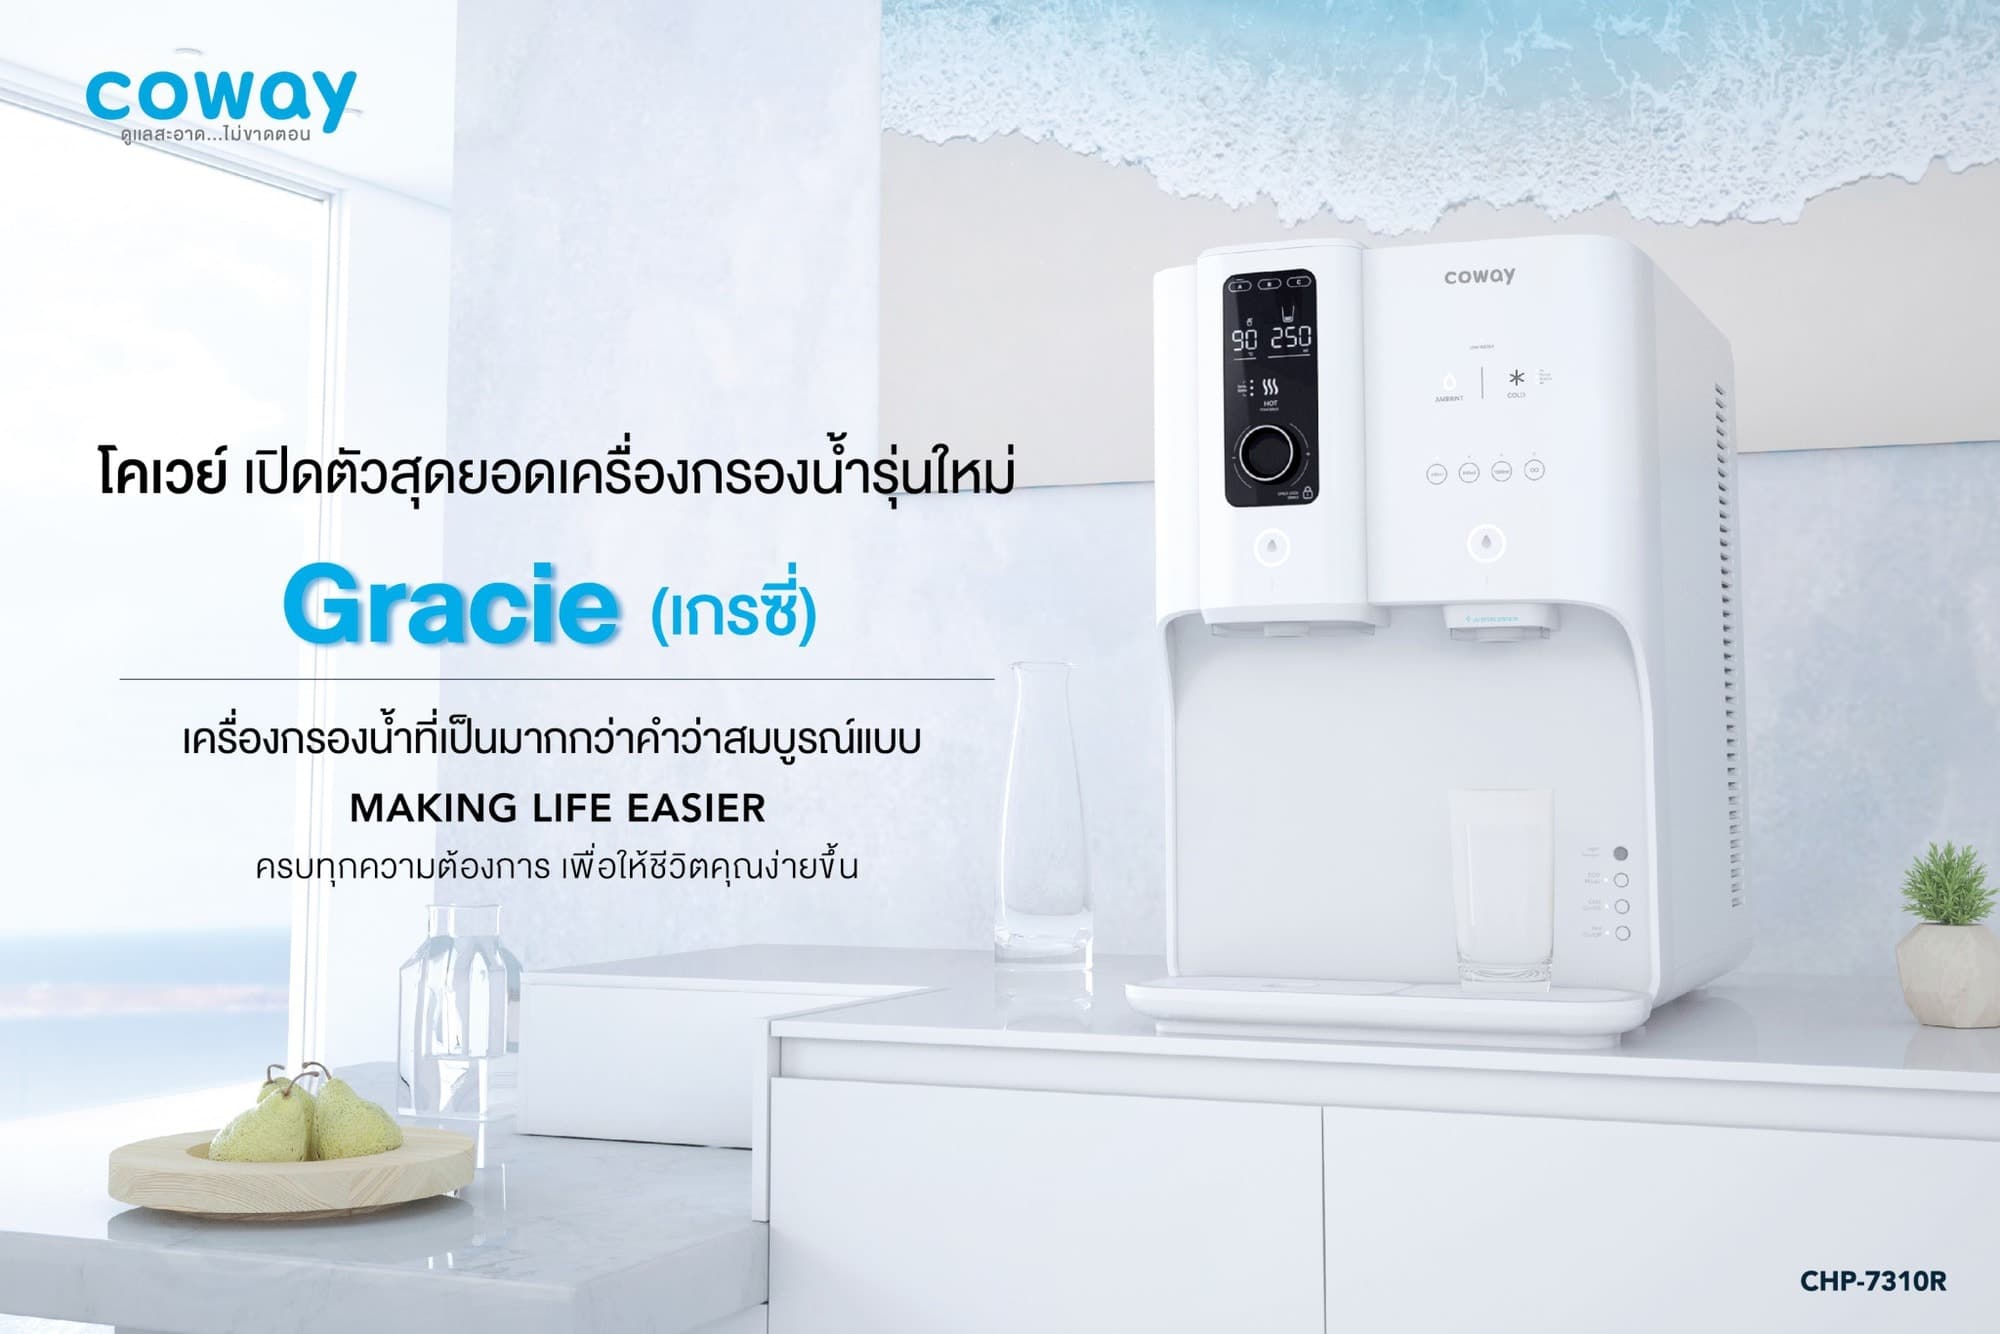 COWAY เปิดตัว ‘GRACIE’ เครื่องกรองน้ำเครื่องเดียวในประเทศไทยที่สามารถเลือกปรับอุณหภูมิสูงสุด 8 ระดับ! 1